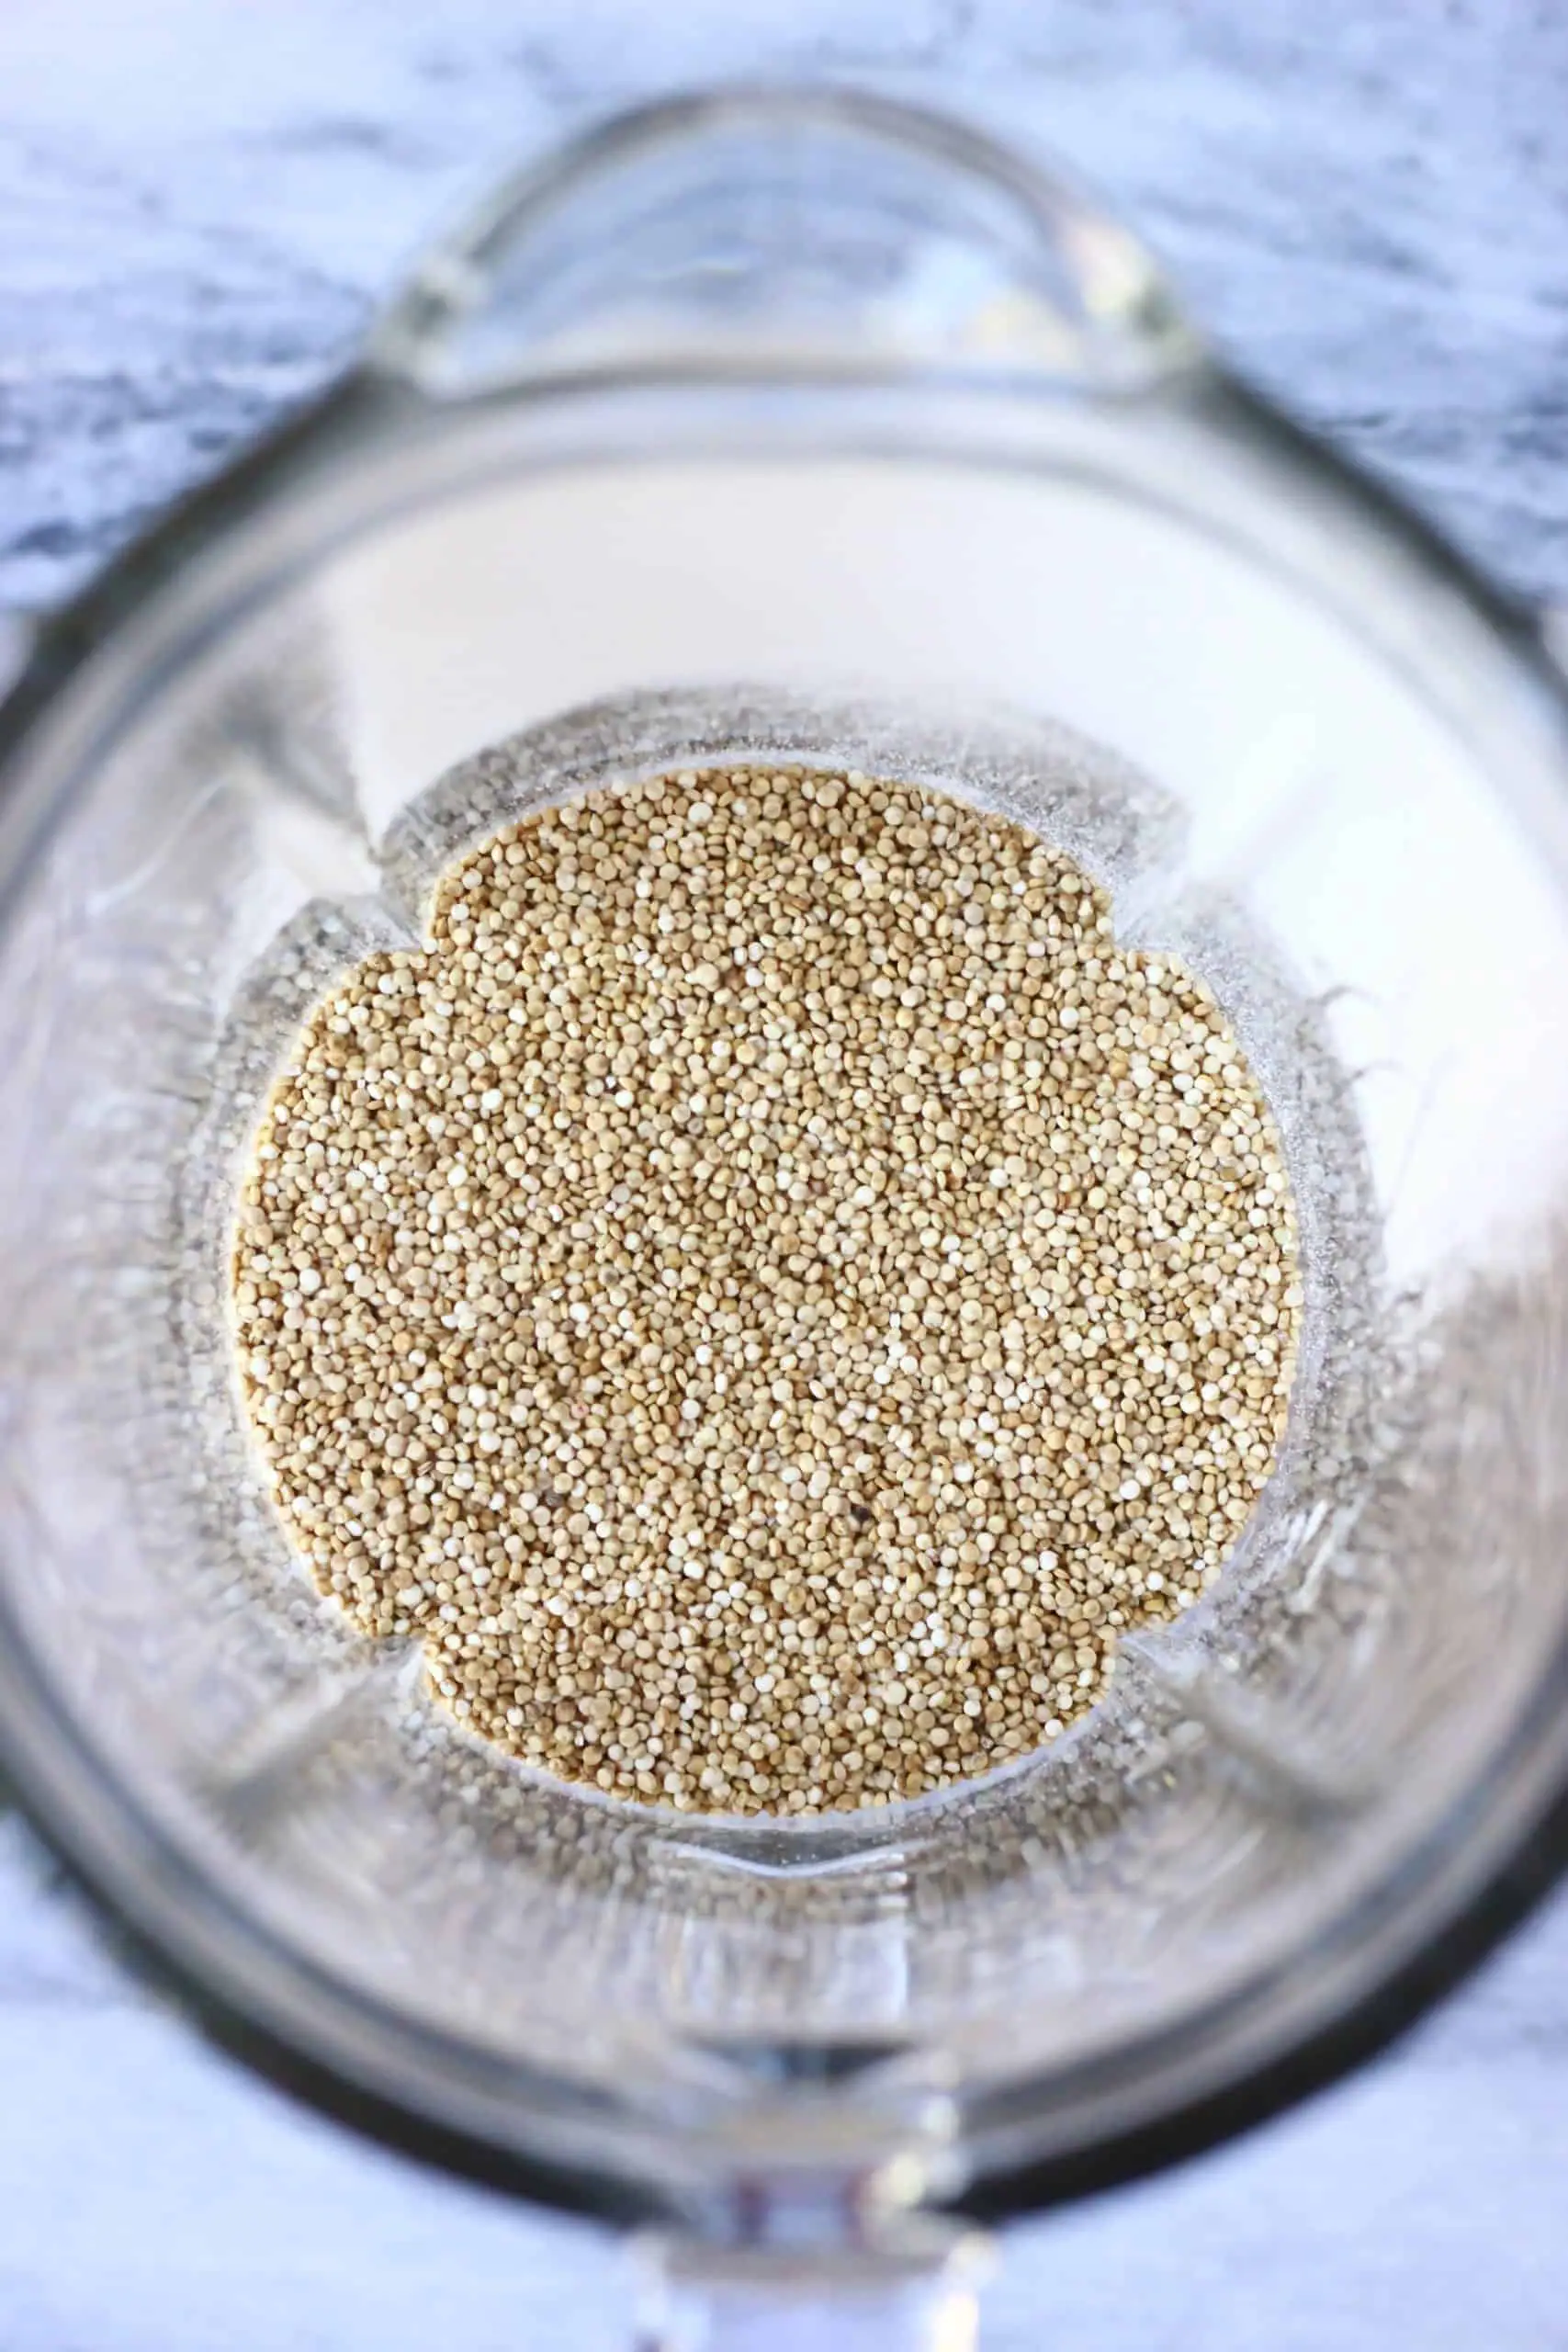 White quinoa in a blender